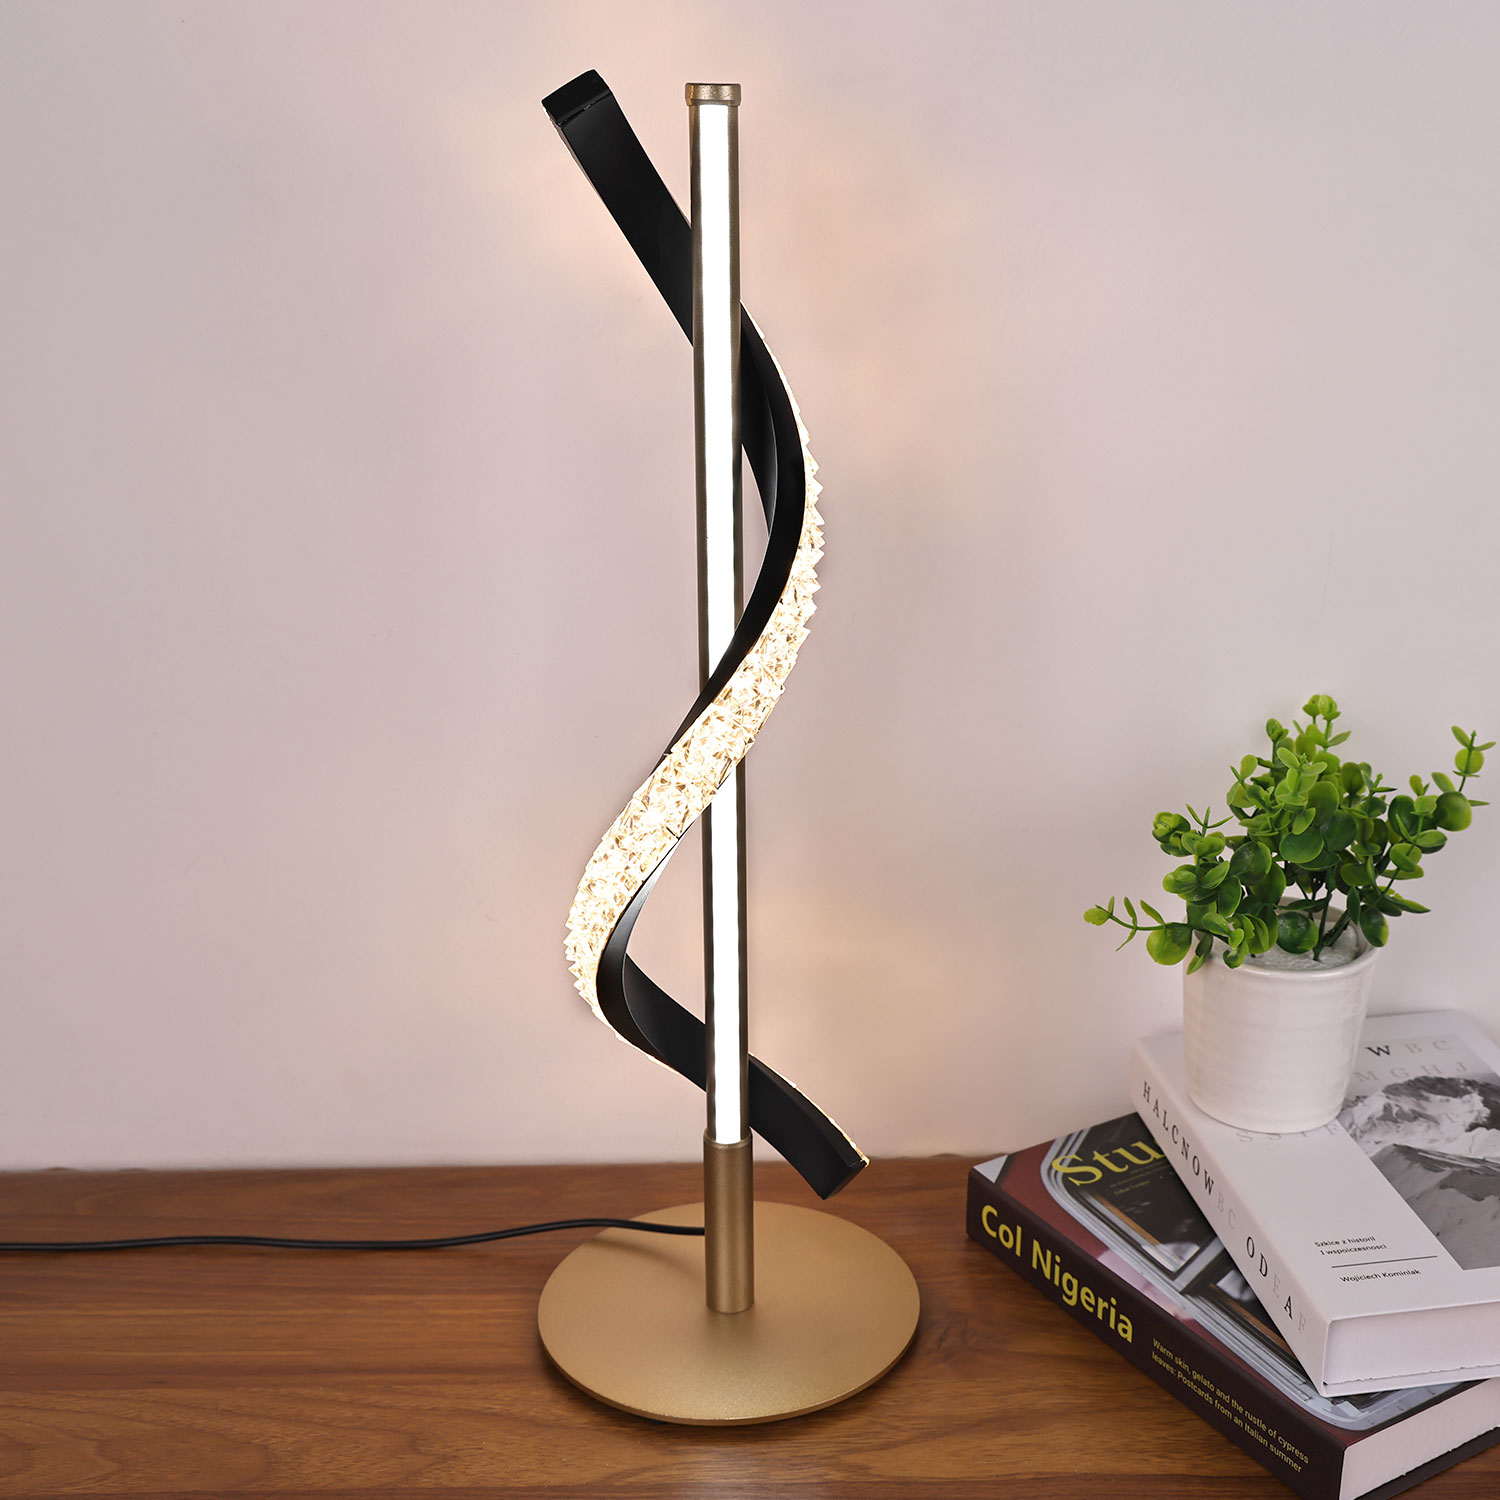 LED Light Fixtures, Desk Lamp for Studying/Bedroom